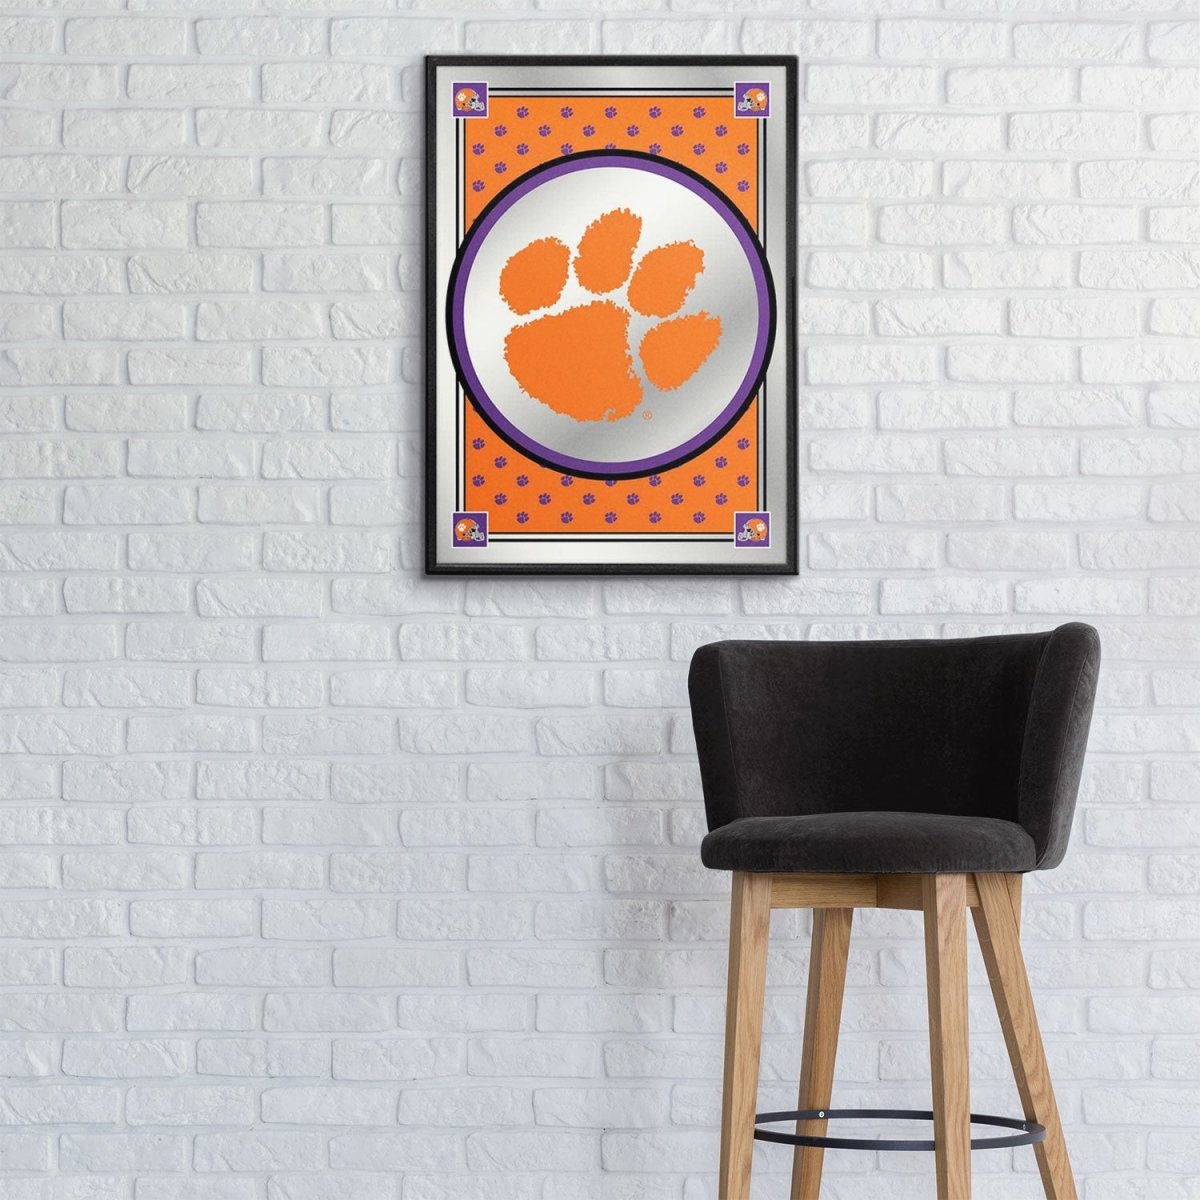 Clemson Tigers: Team Spirit - Framed Mirrored Wall Sign - The Fan-Brand